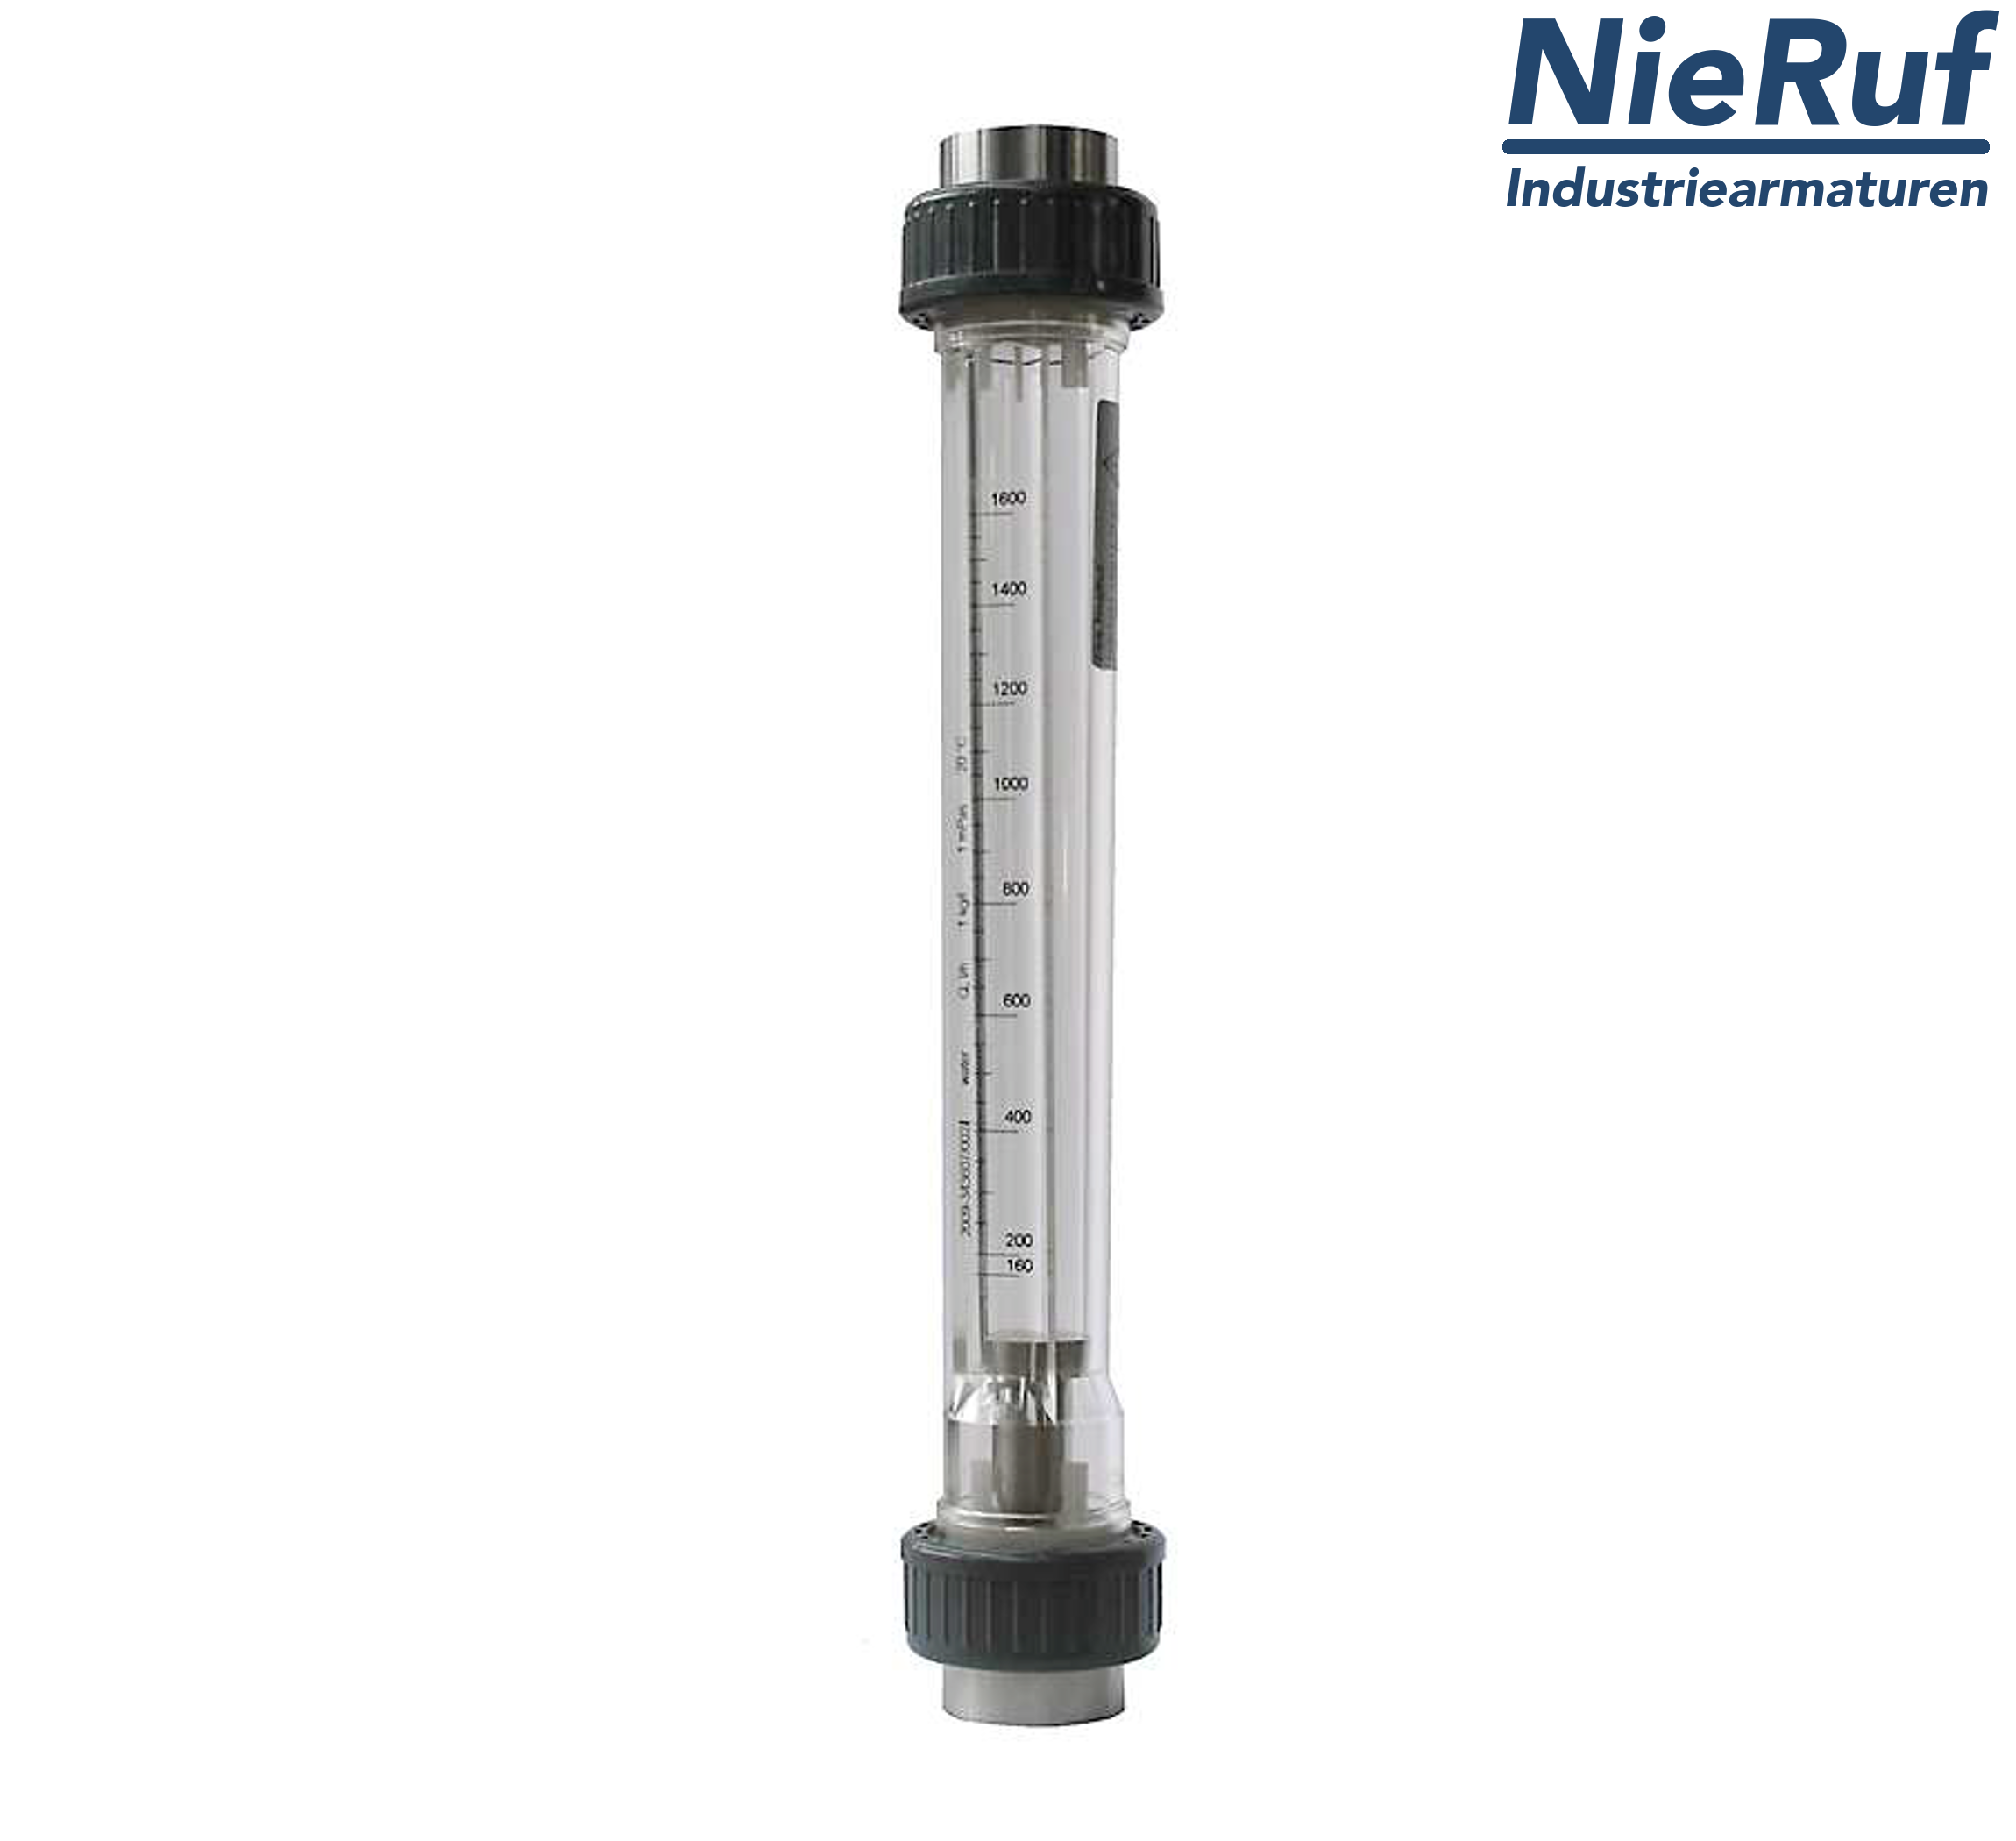 Variable area flowmeter 3/4" inch NPT 160.0 - 1600 l/h water EPDM